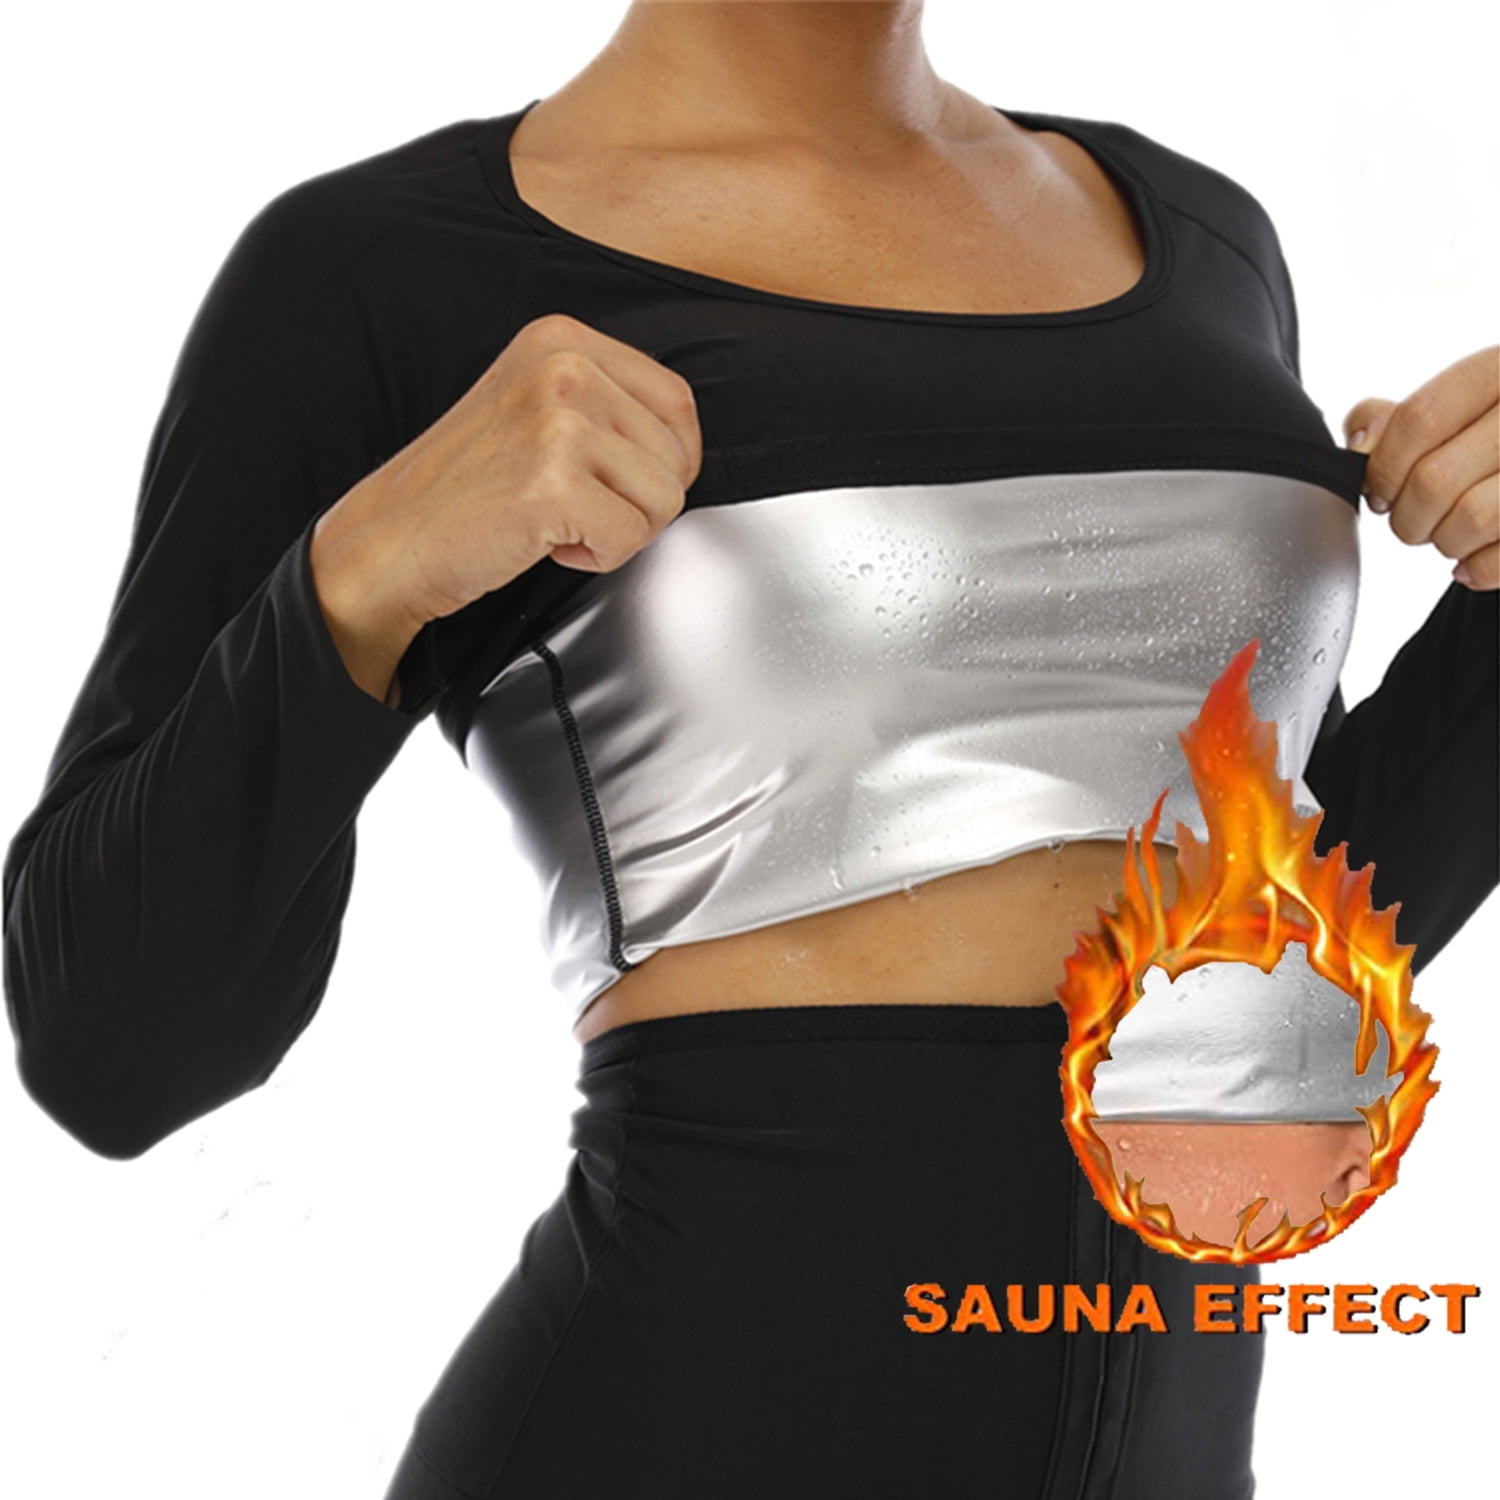 Kutting Weight Sauna Suit Weight Loss Neoprene Black & Pink Exercise Tank Top 